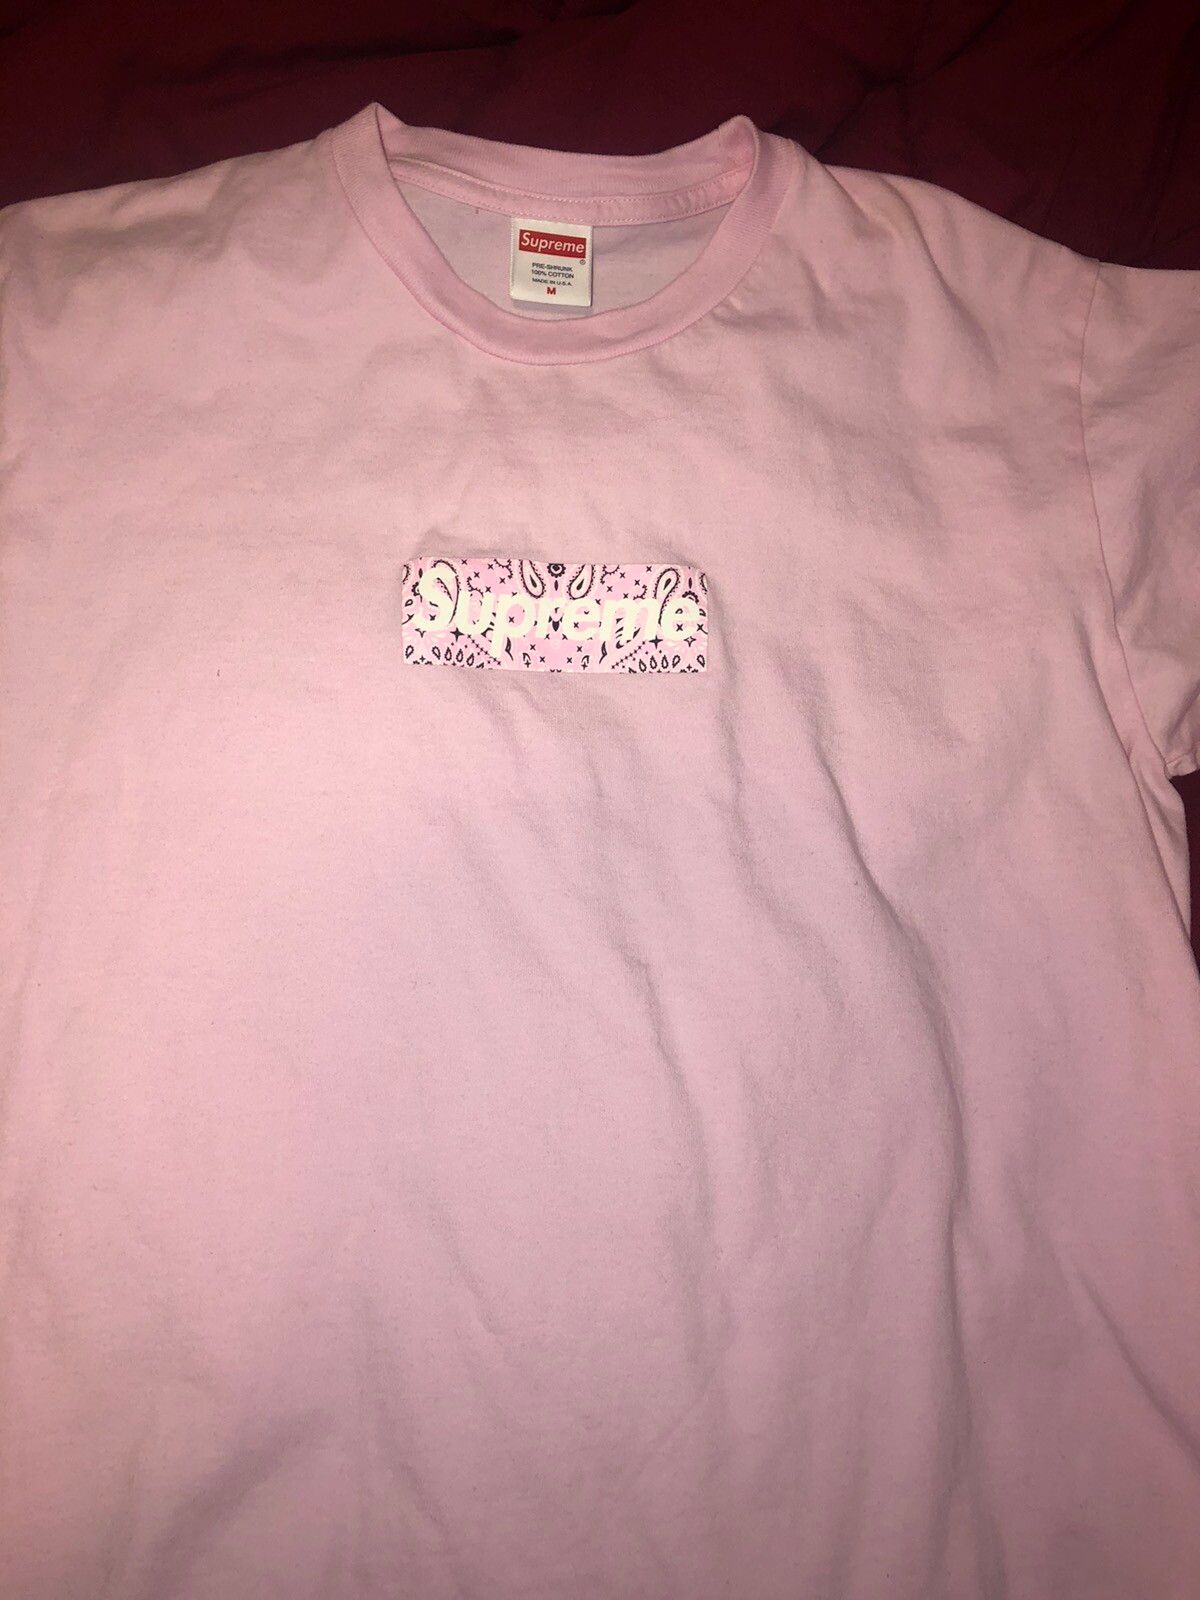 Supreme FW19 Supreme Bandana Box Logo Tee Light Pink Size M | Grailed